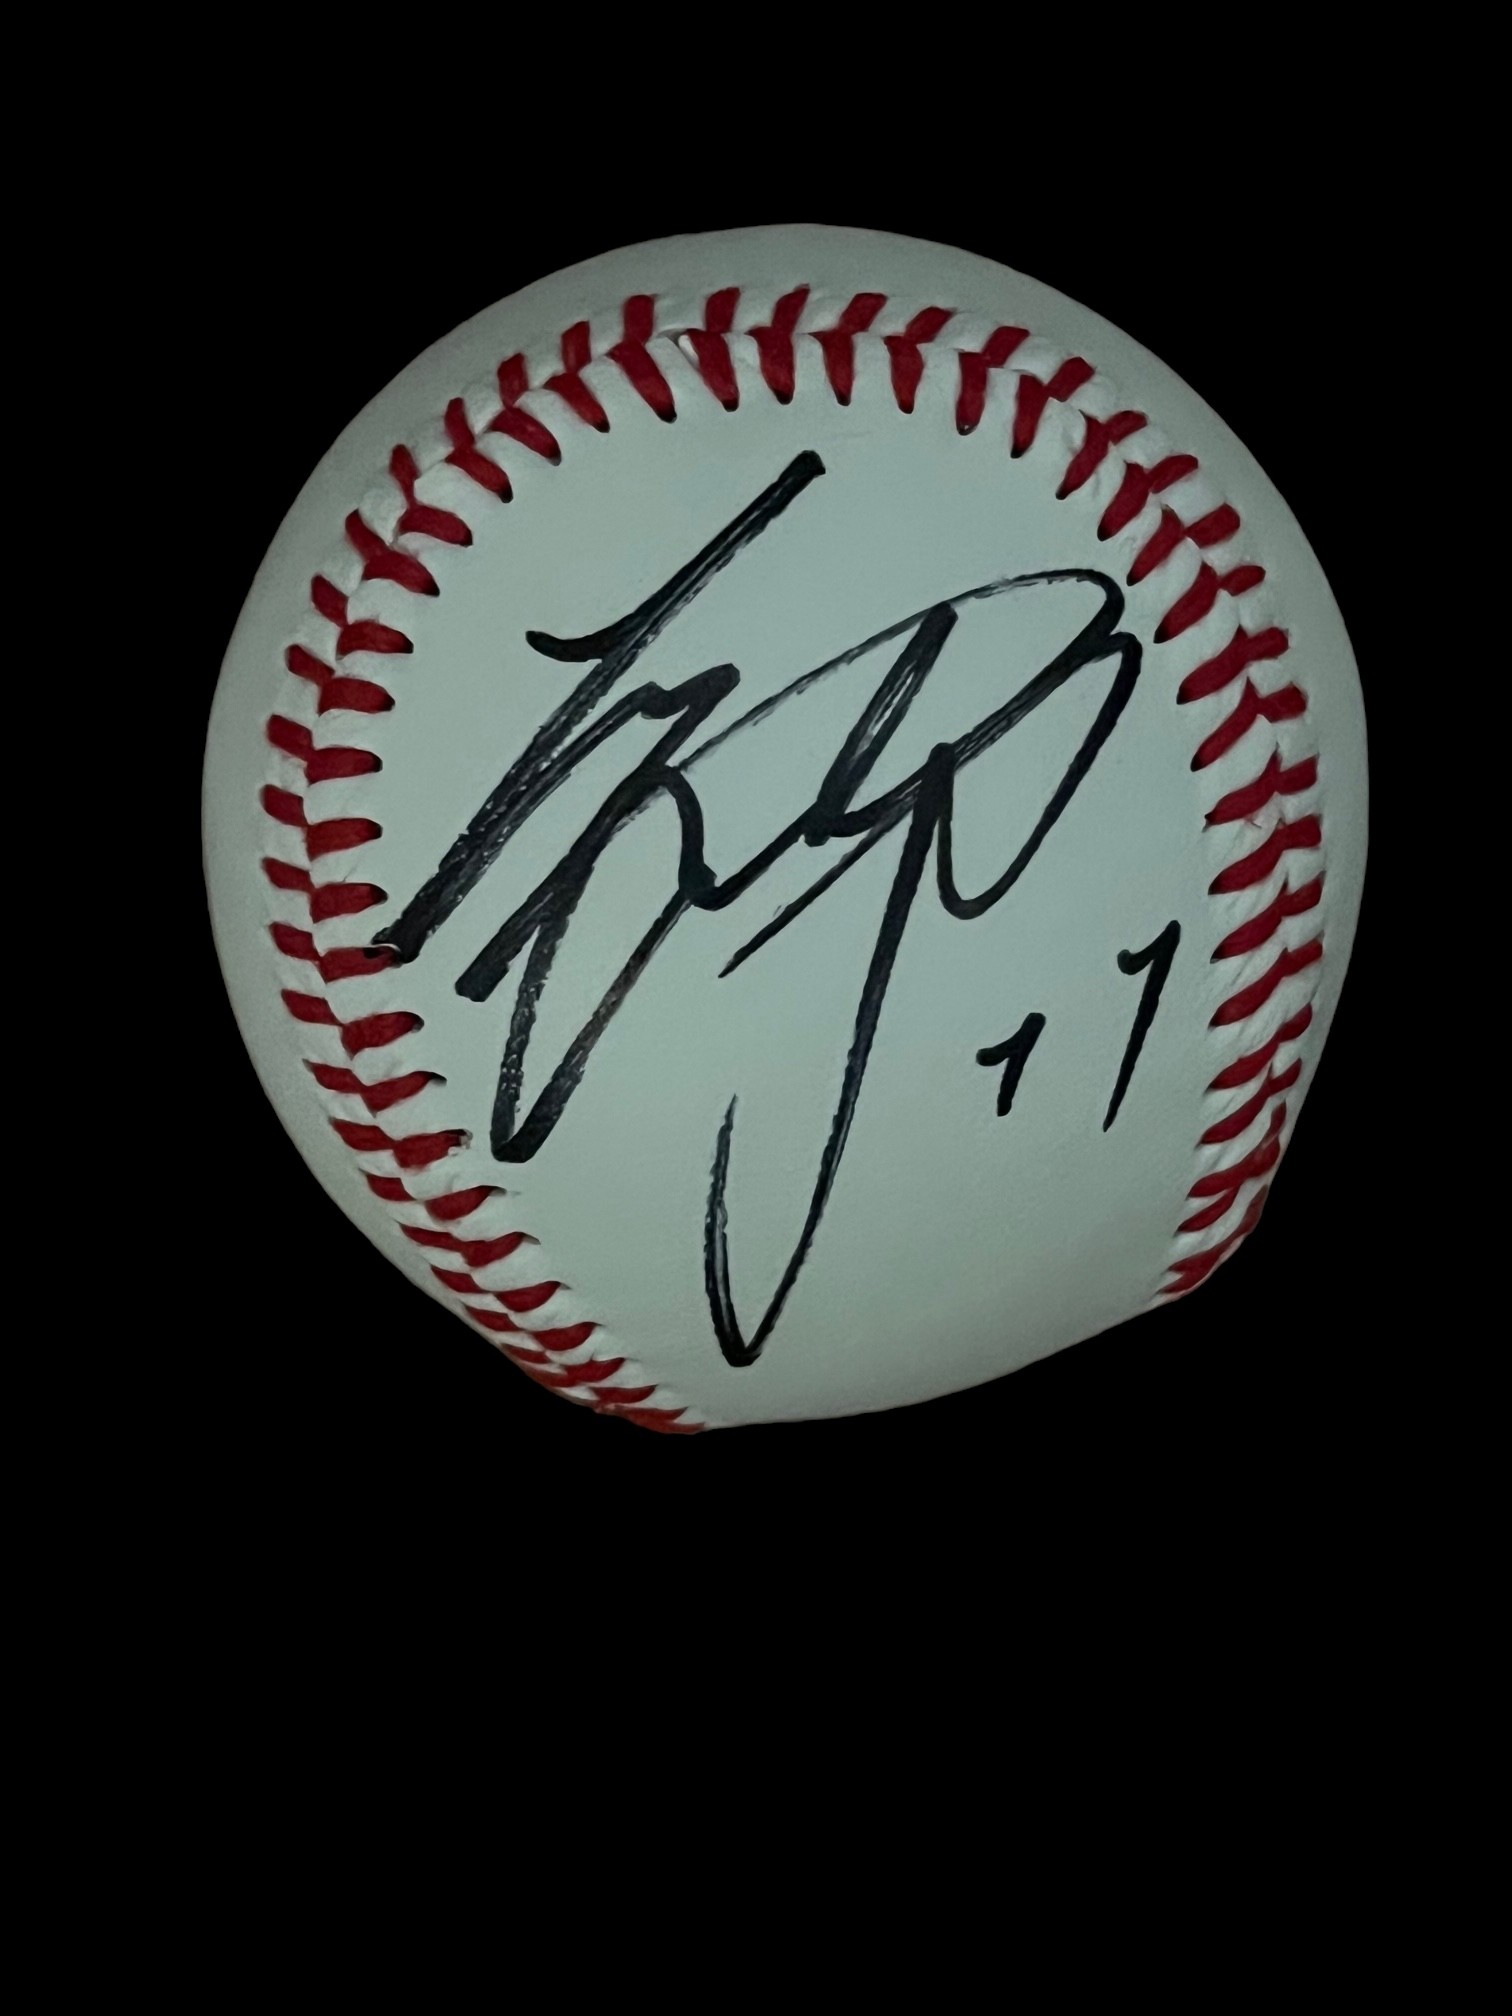 Shohei Ohtani 2022 Major League Baseball All-Star Game Autographed